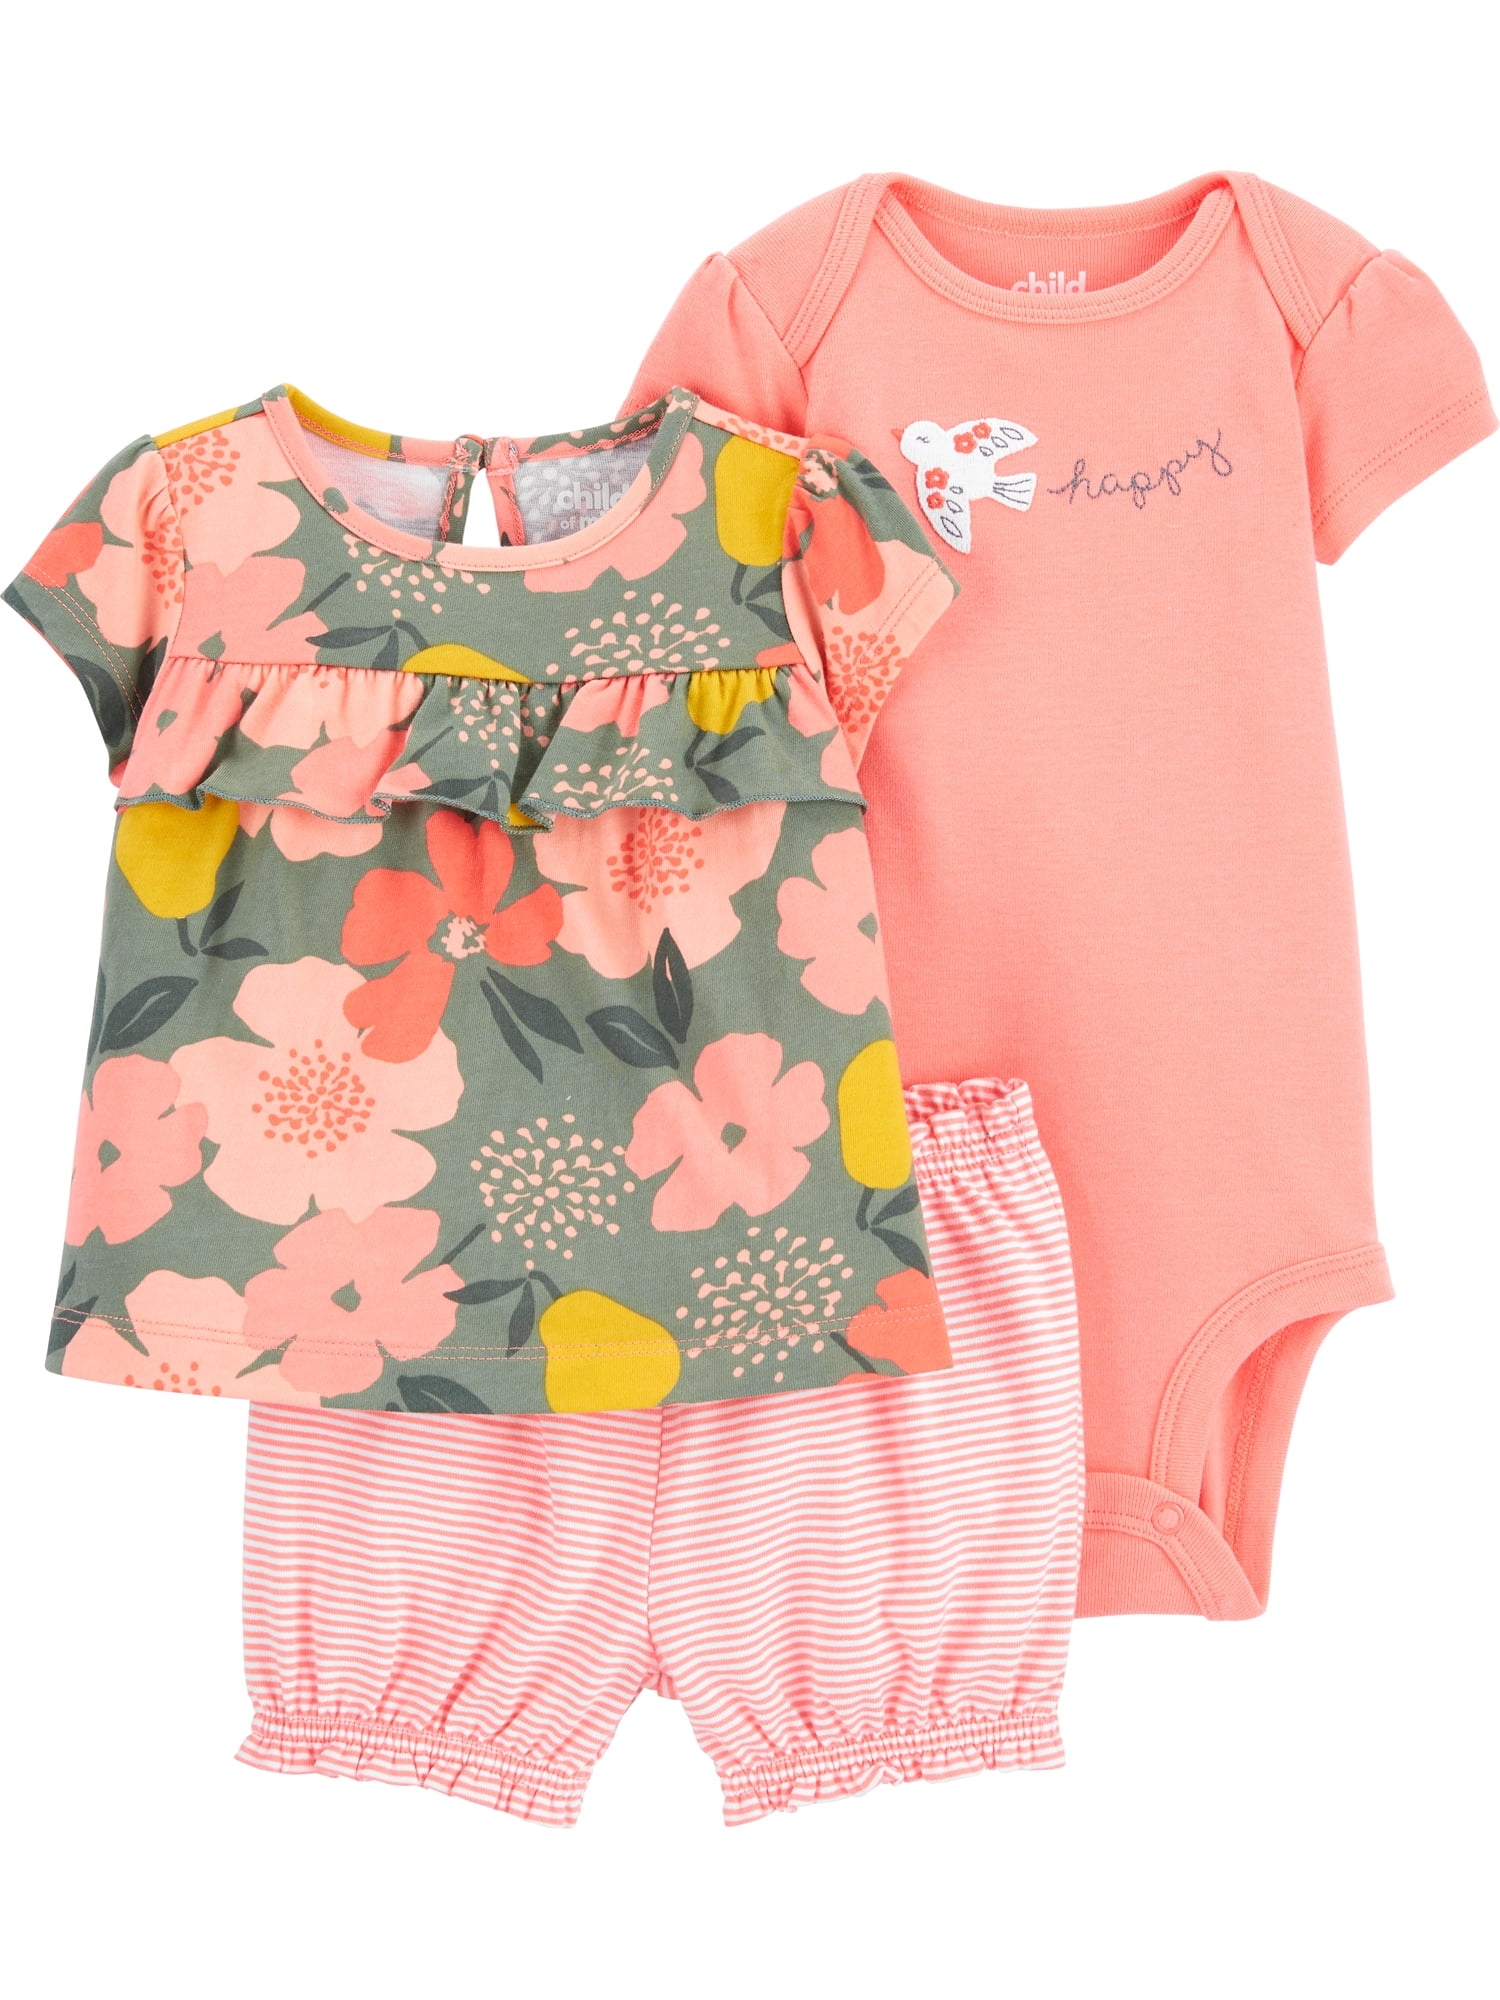 Infant Girls Baby Outfit Orange & White Toucan Bird Shirt & Ruffled Skirt Set 